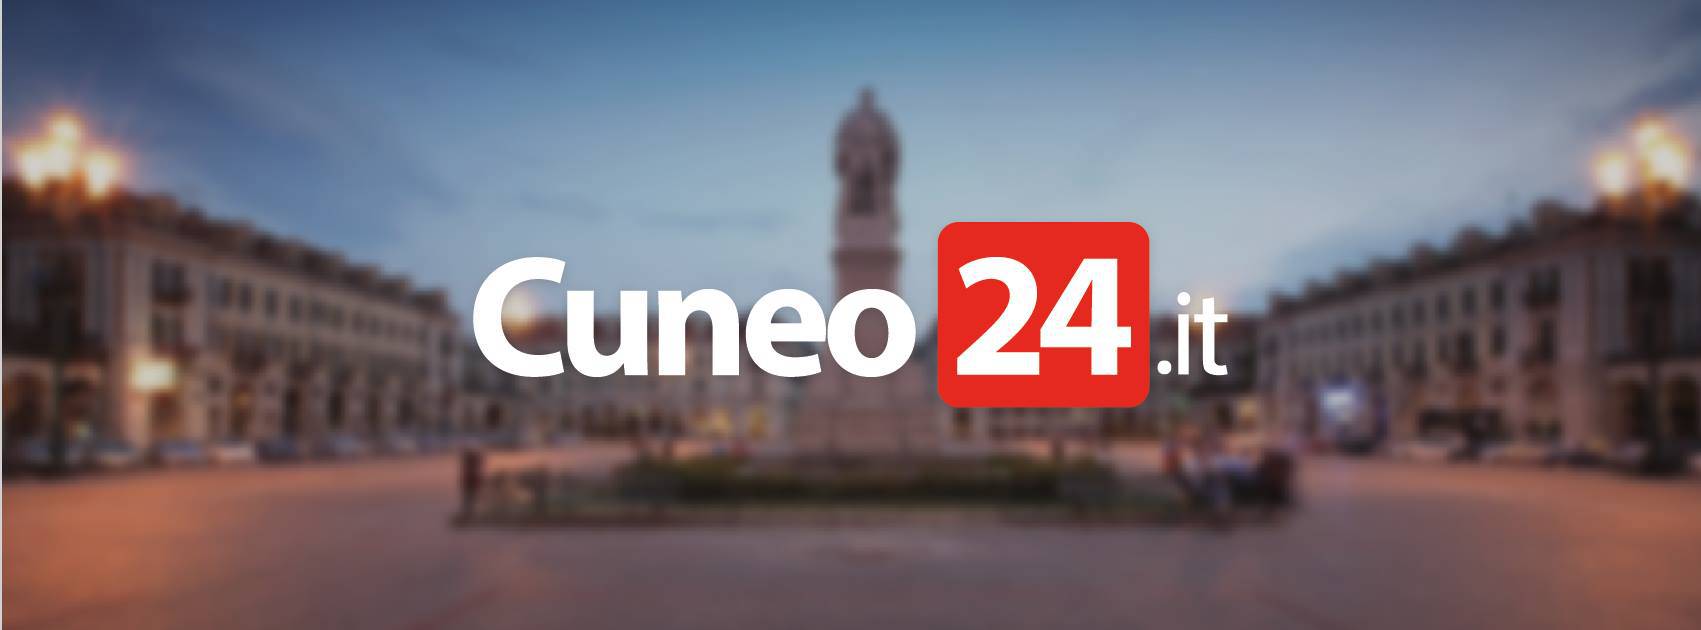 cuneo24